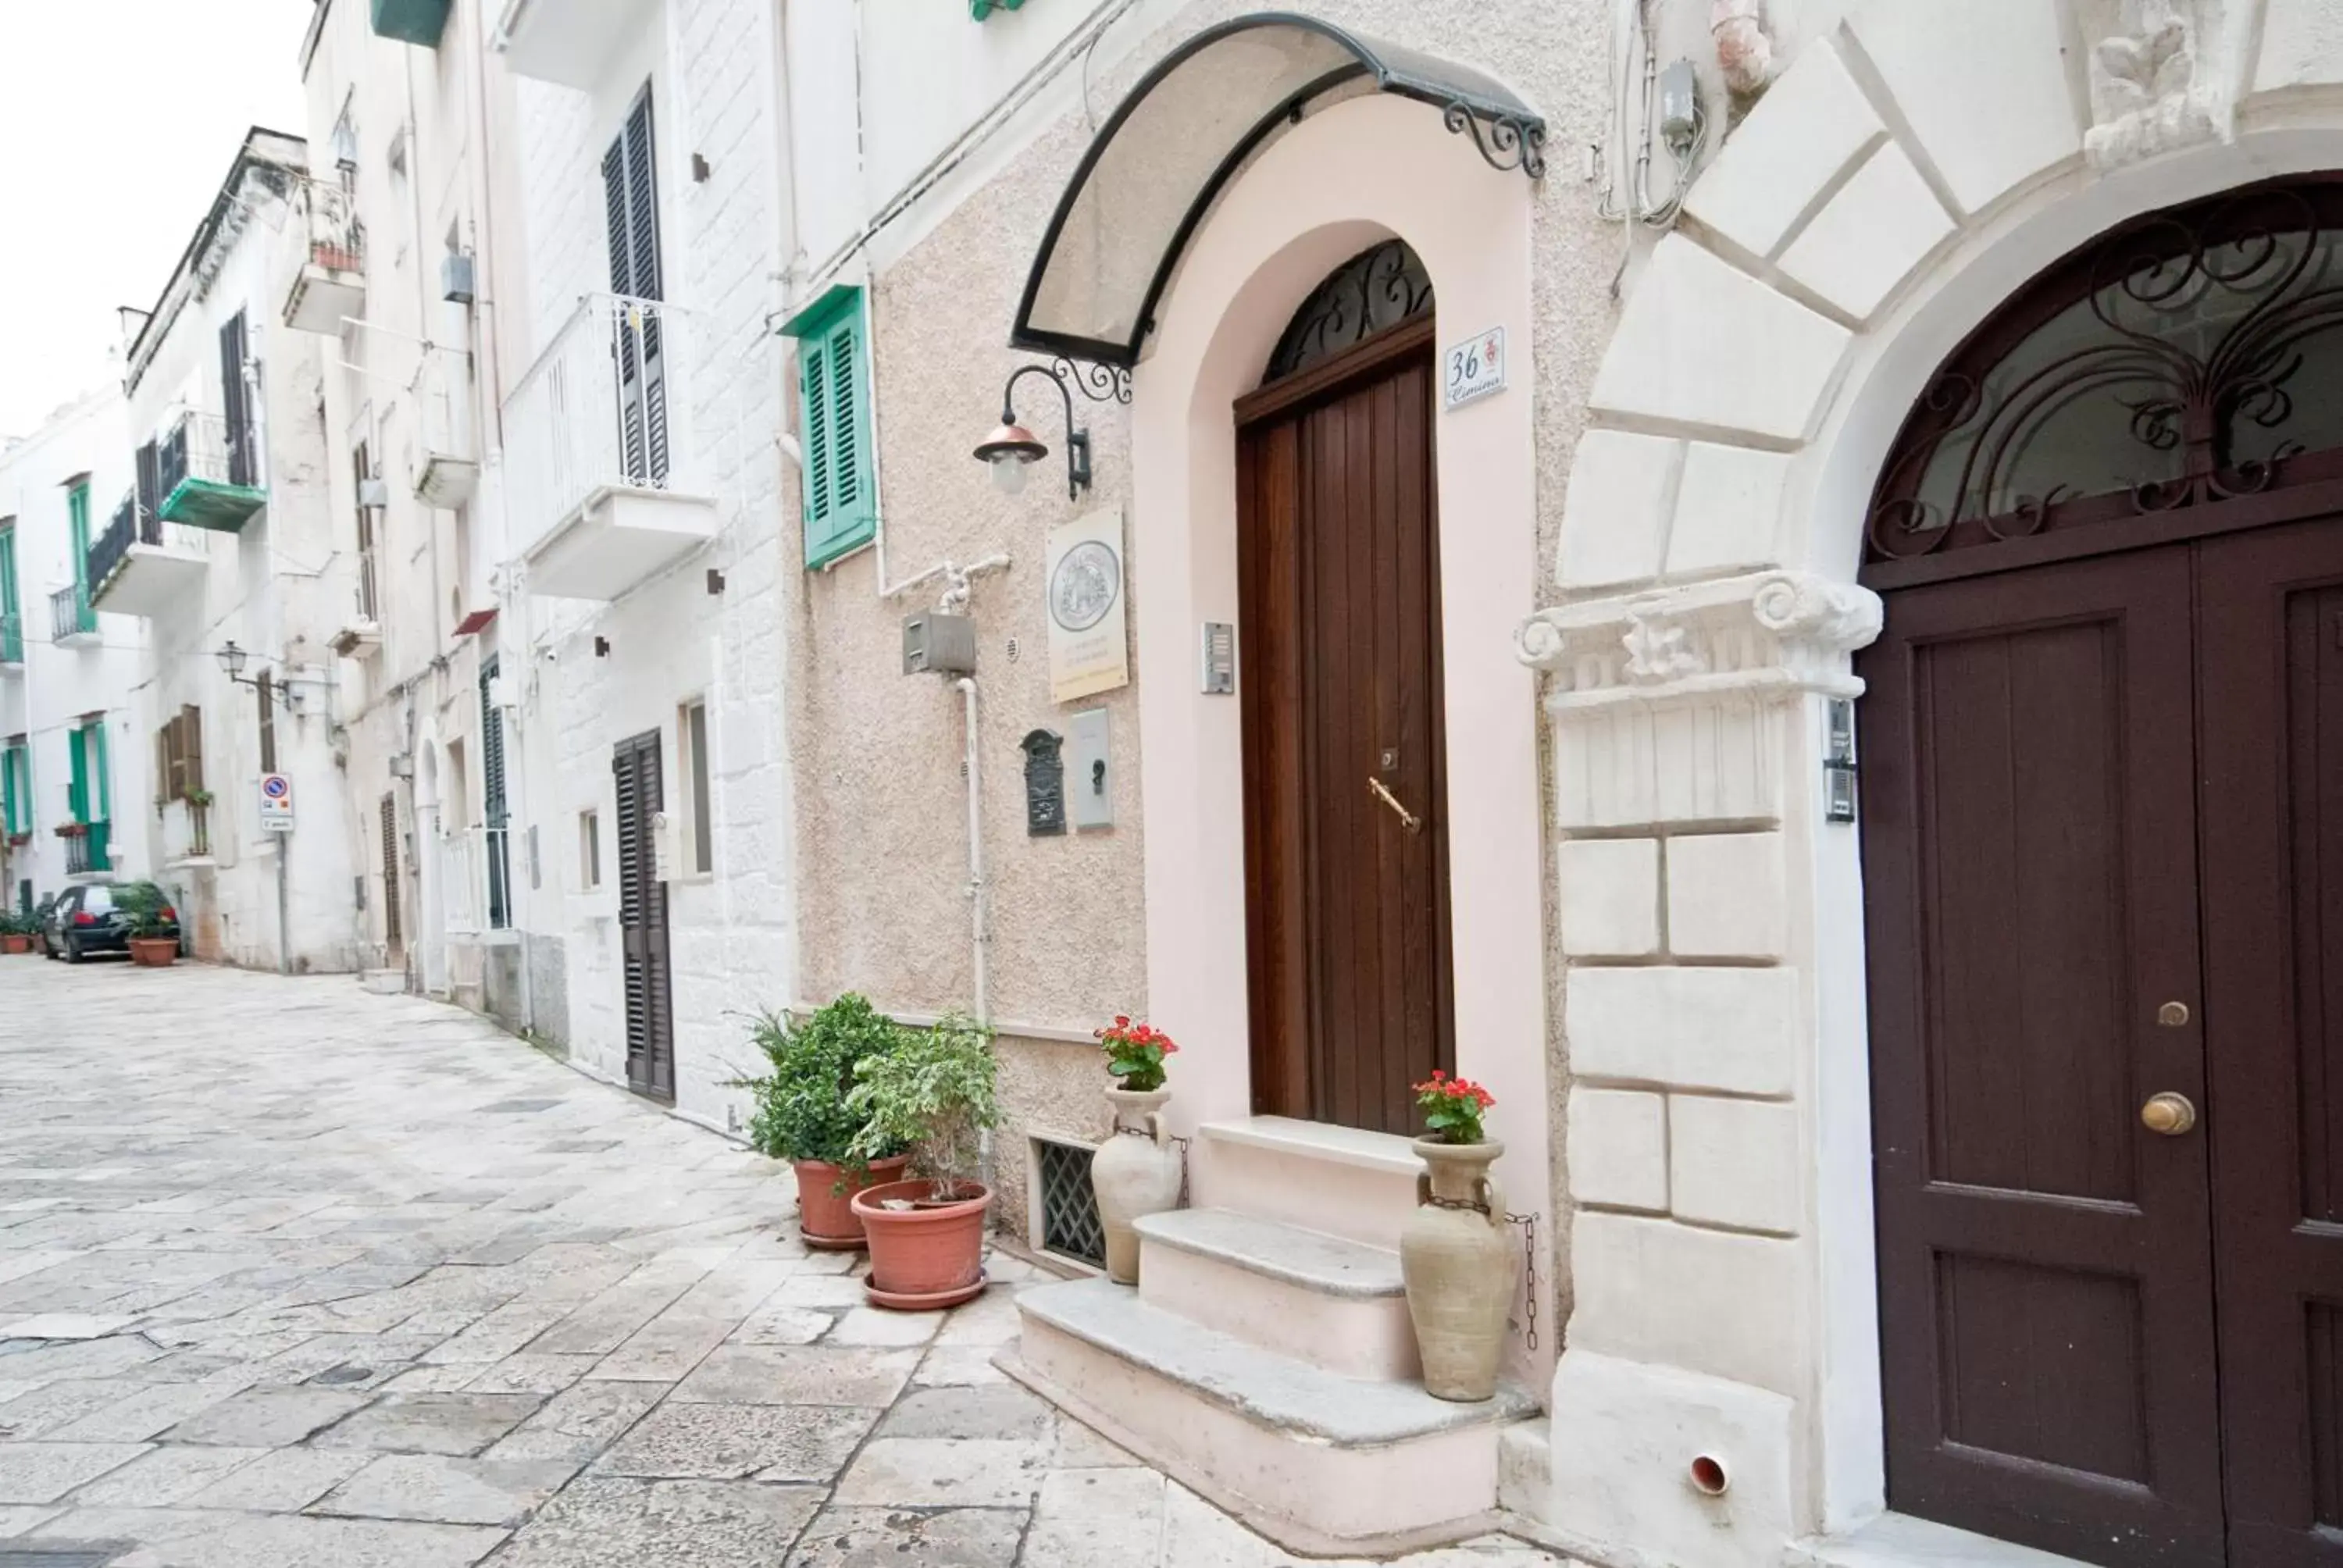 Facade/entrance in B&B Casa Cimino - Monopoli - Puglia